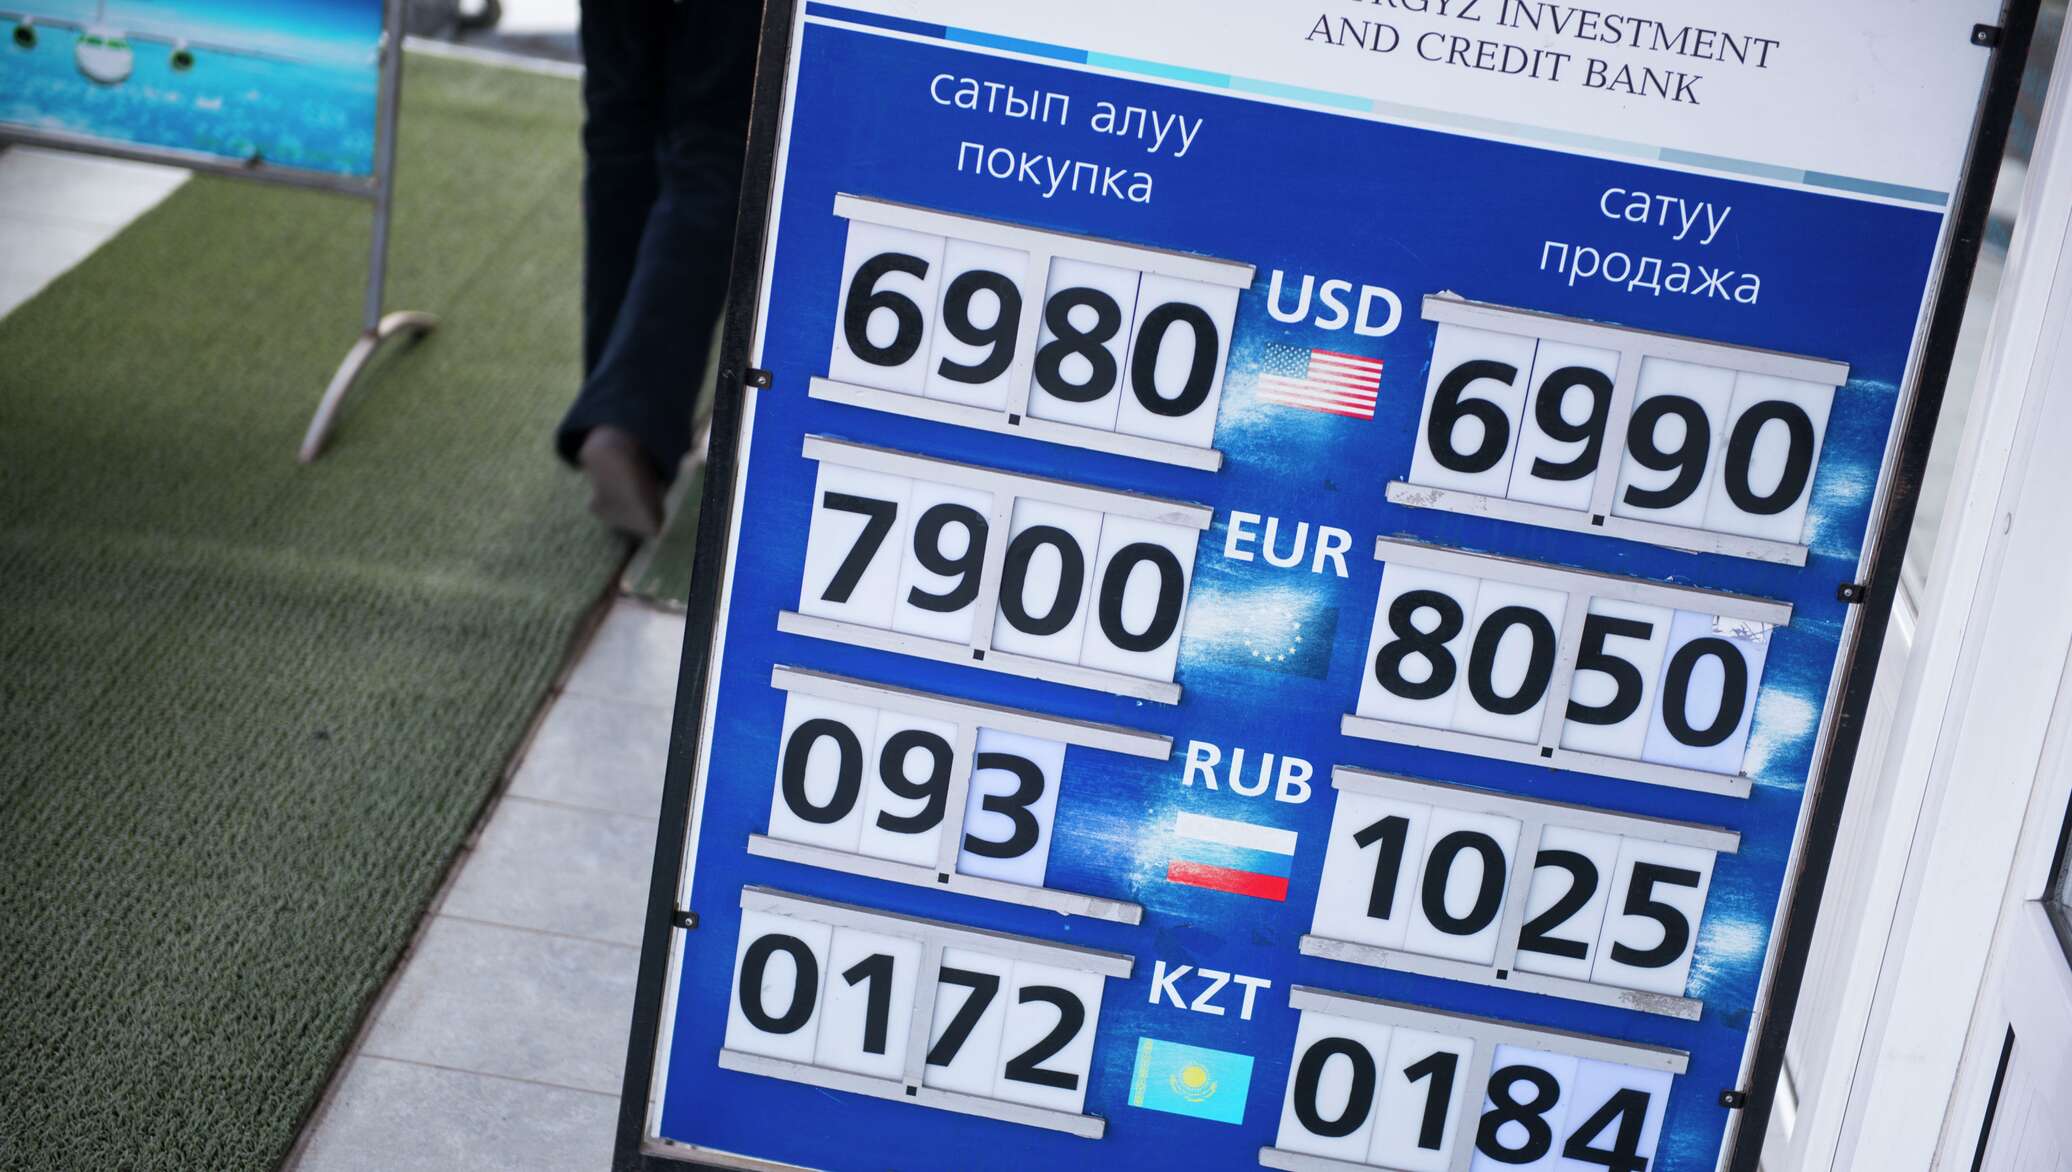 Курс валюта кыргызстана рубль сегодня бишкек. Курсы валют. Валюта Кыргызстана сом. Курсы валют киргизский сом. Валюта Кыргызстана рубль на сом.